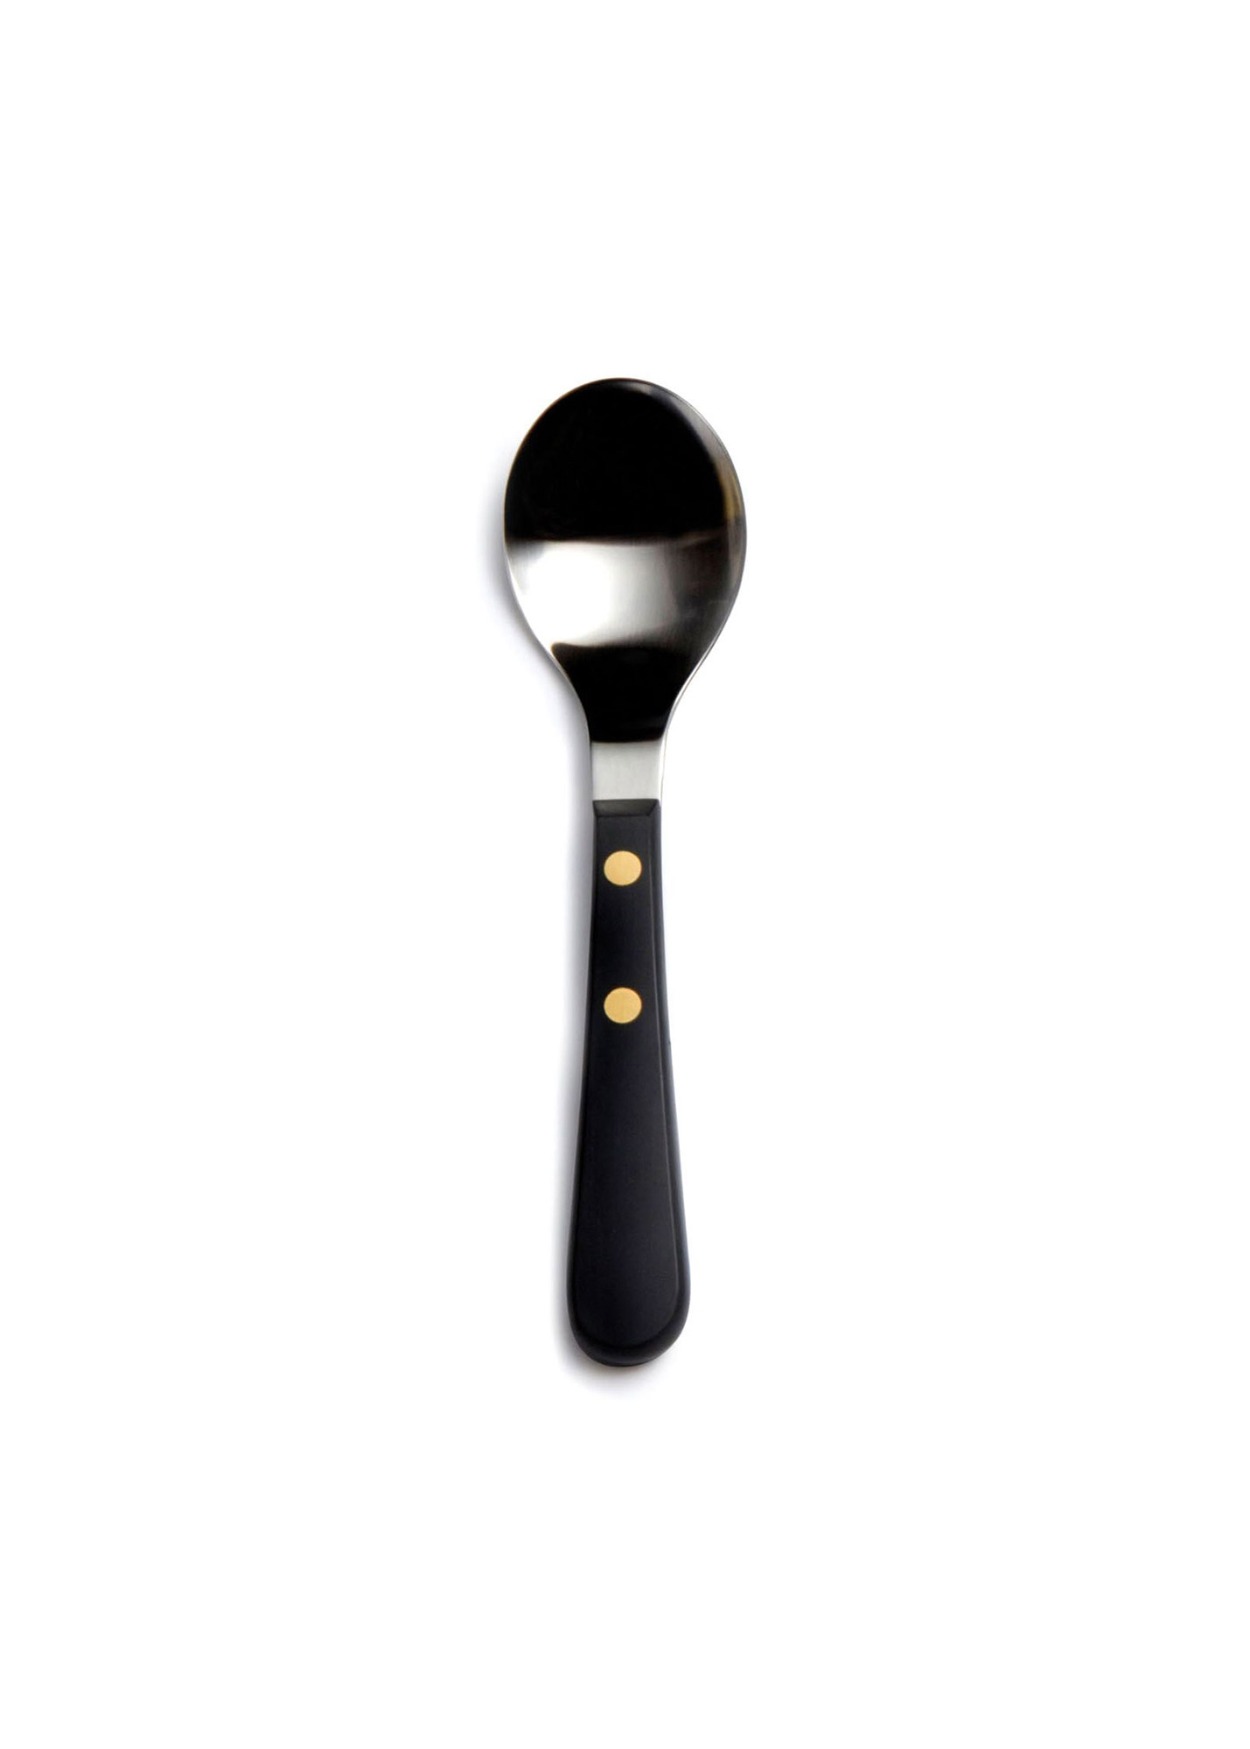 Provencal black dessert spoon